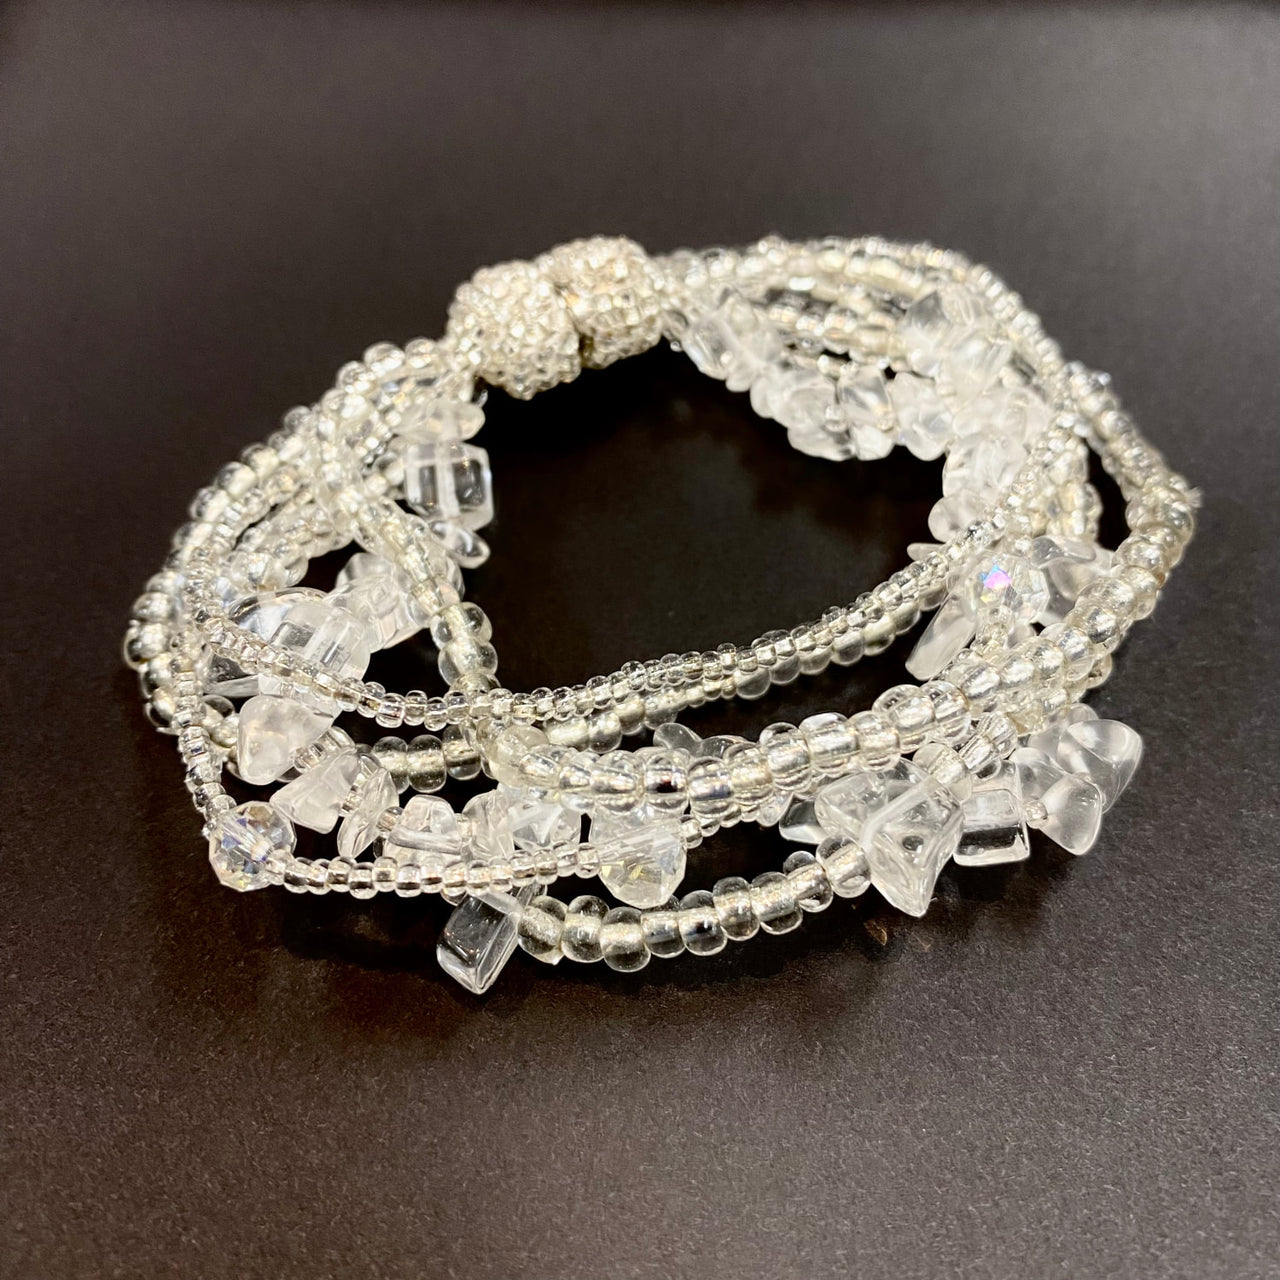 Clear quartz bracelet with silver beads - Crystal Beaded 6 Strand 7.5’ Bracelet #LV1779